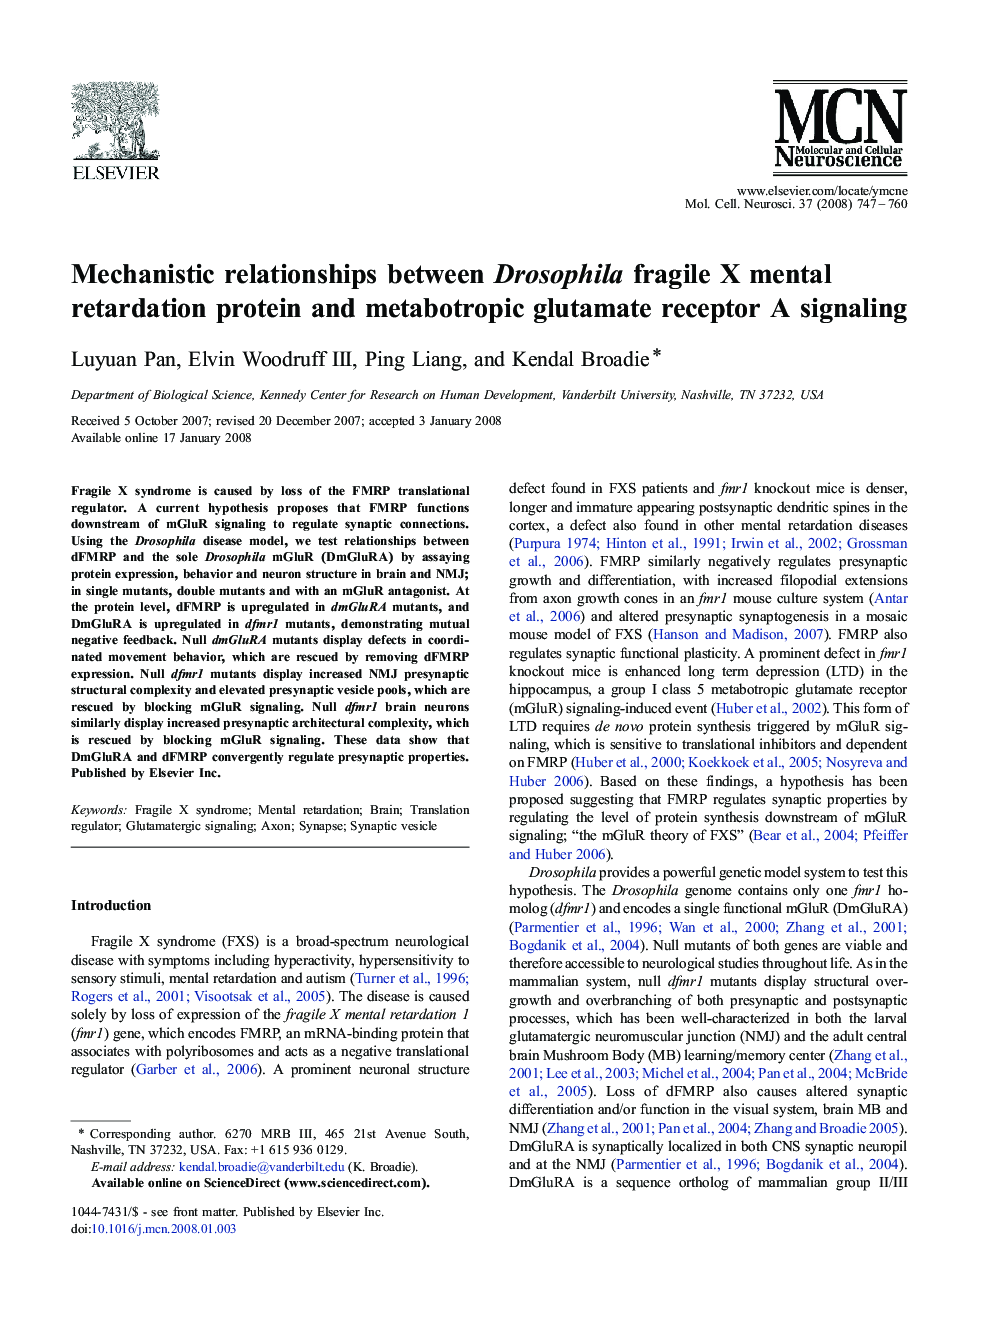 Mechanistic relationships between Drosophila fragile X mental retardation protein and metabotropic glutamate receptor A signaling